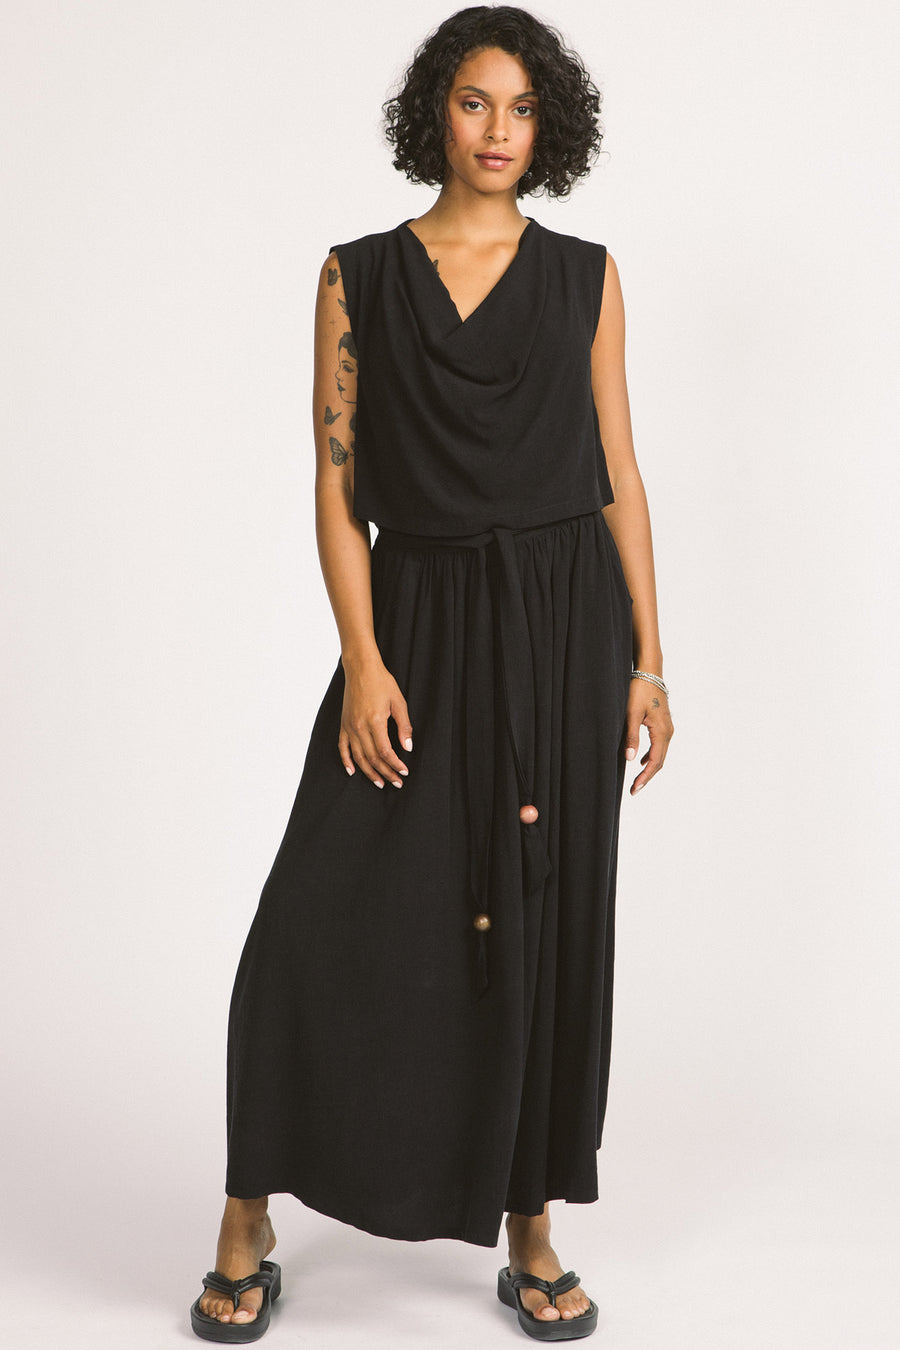 Woman wearing black Oriana maxi skirt by Allison Wonderland. 